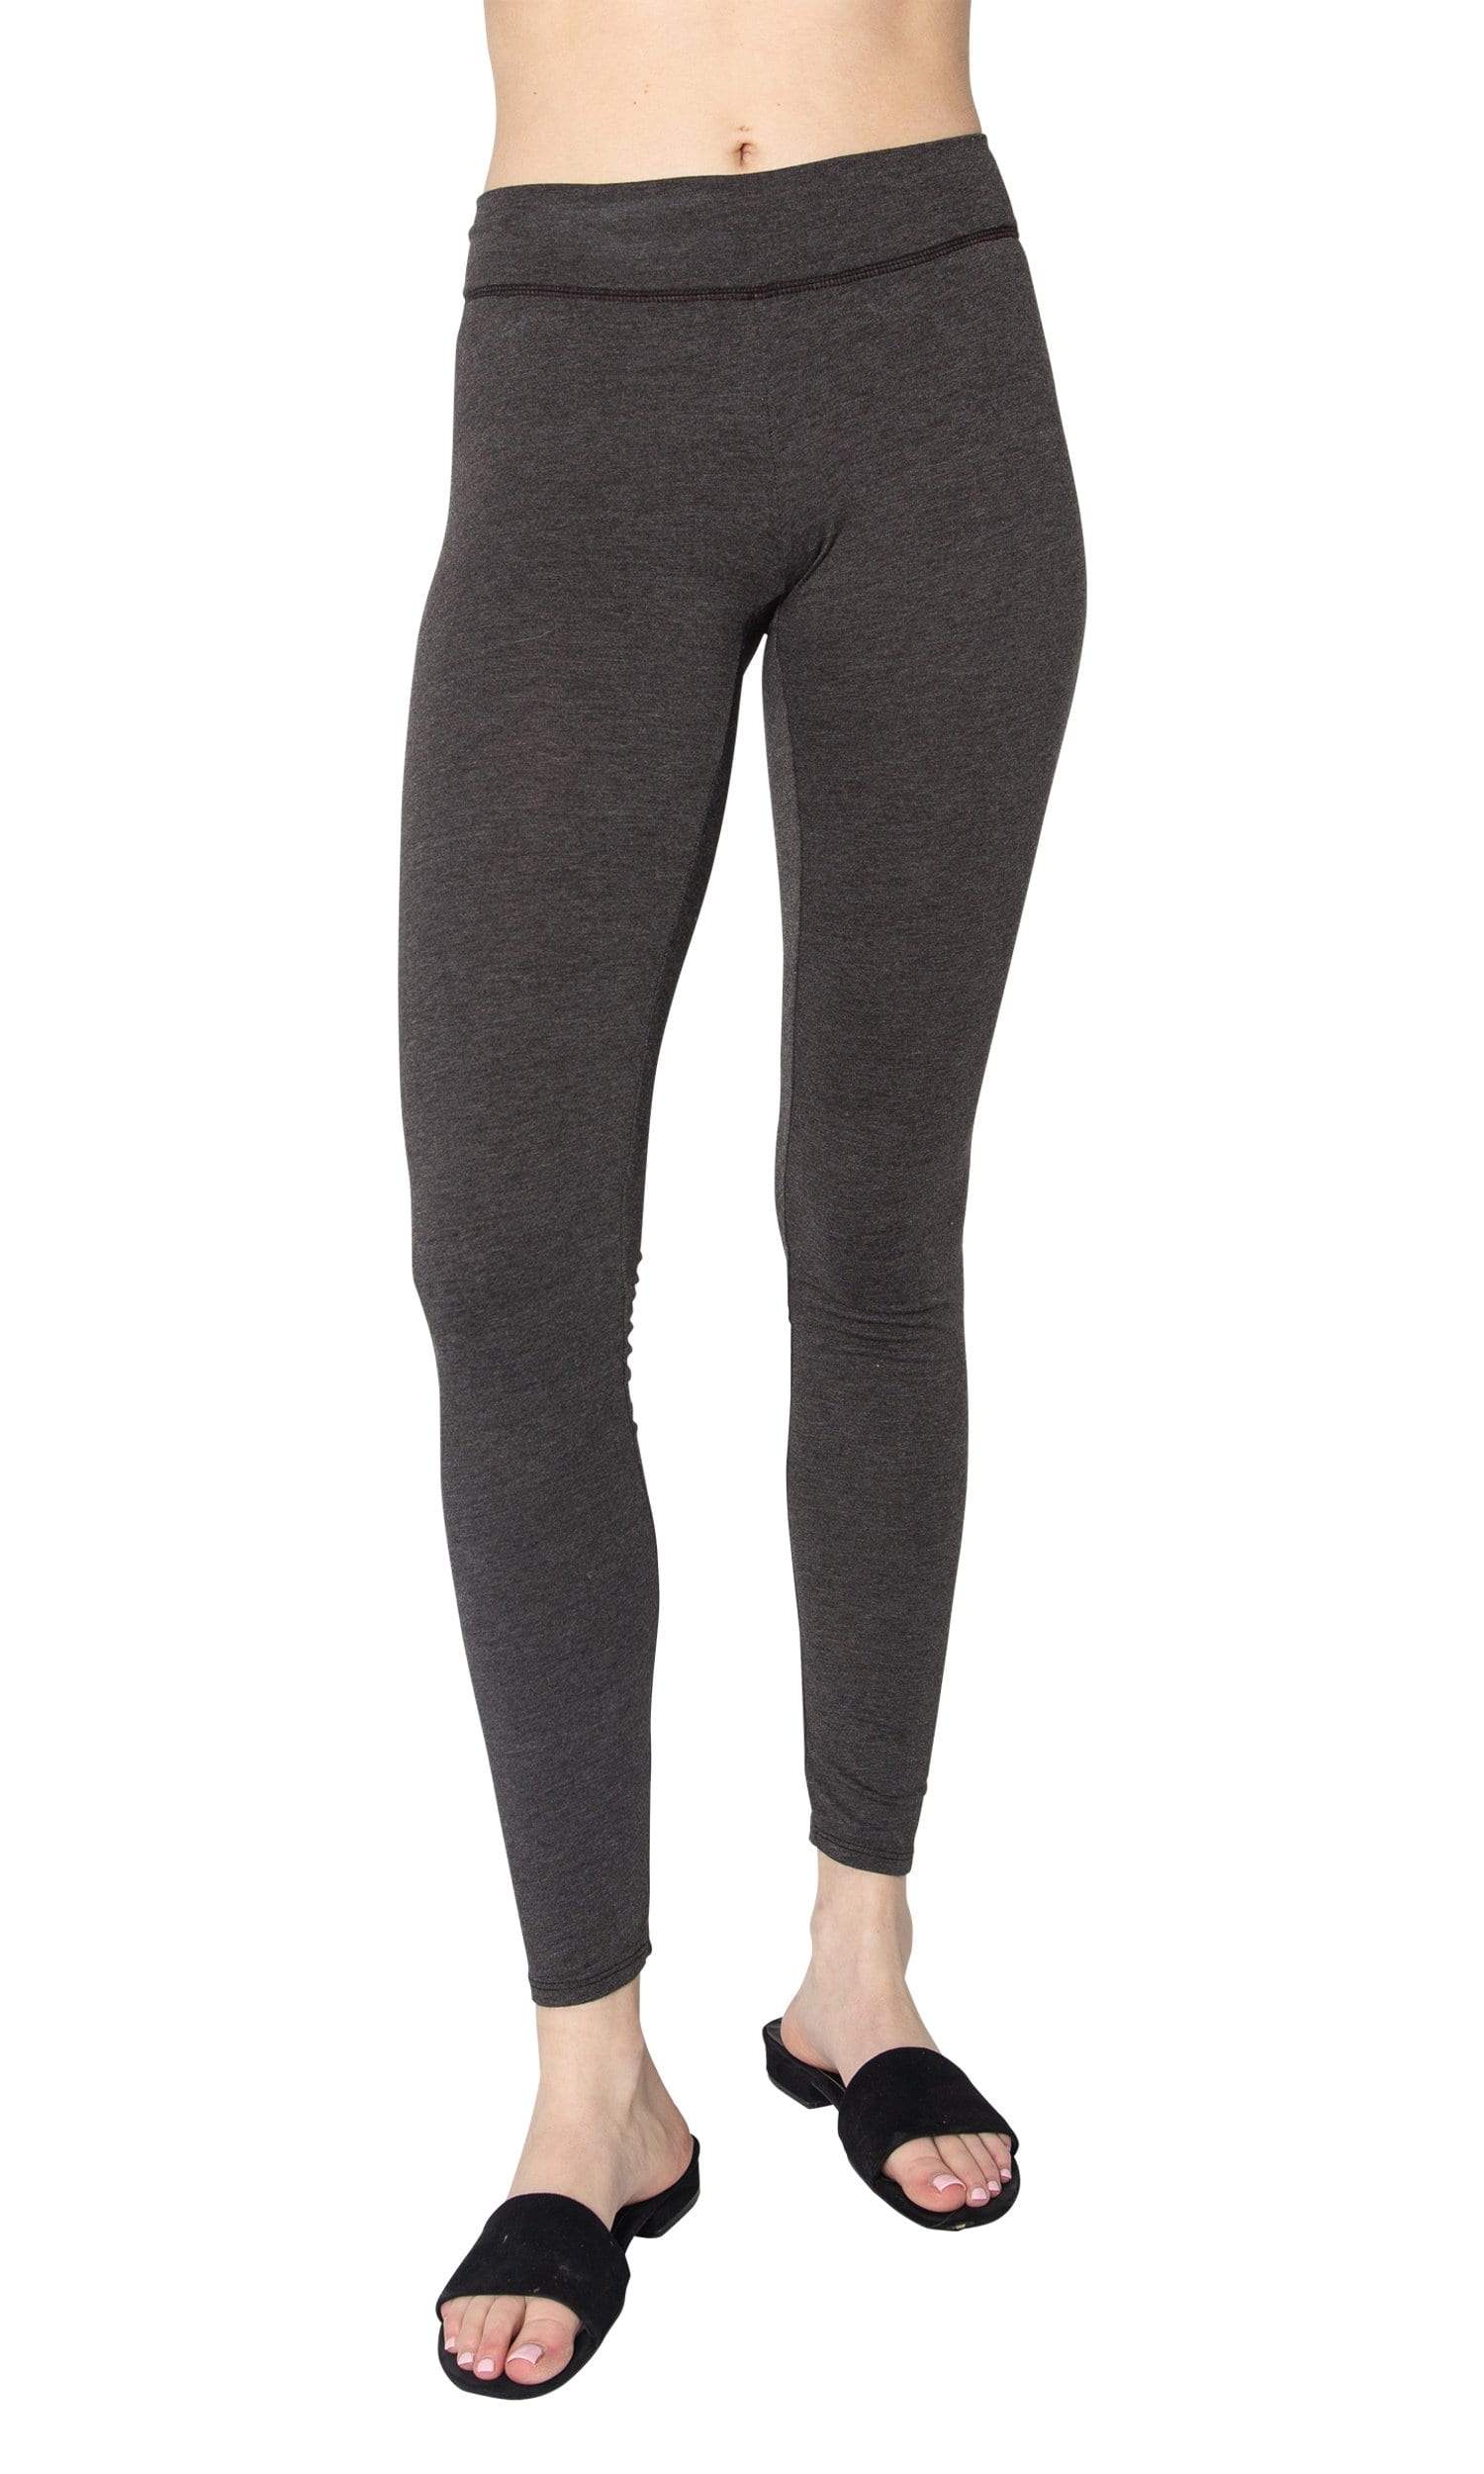 Fascinating grey color cotton leggings